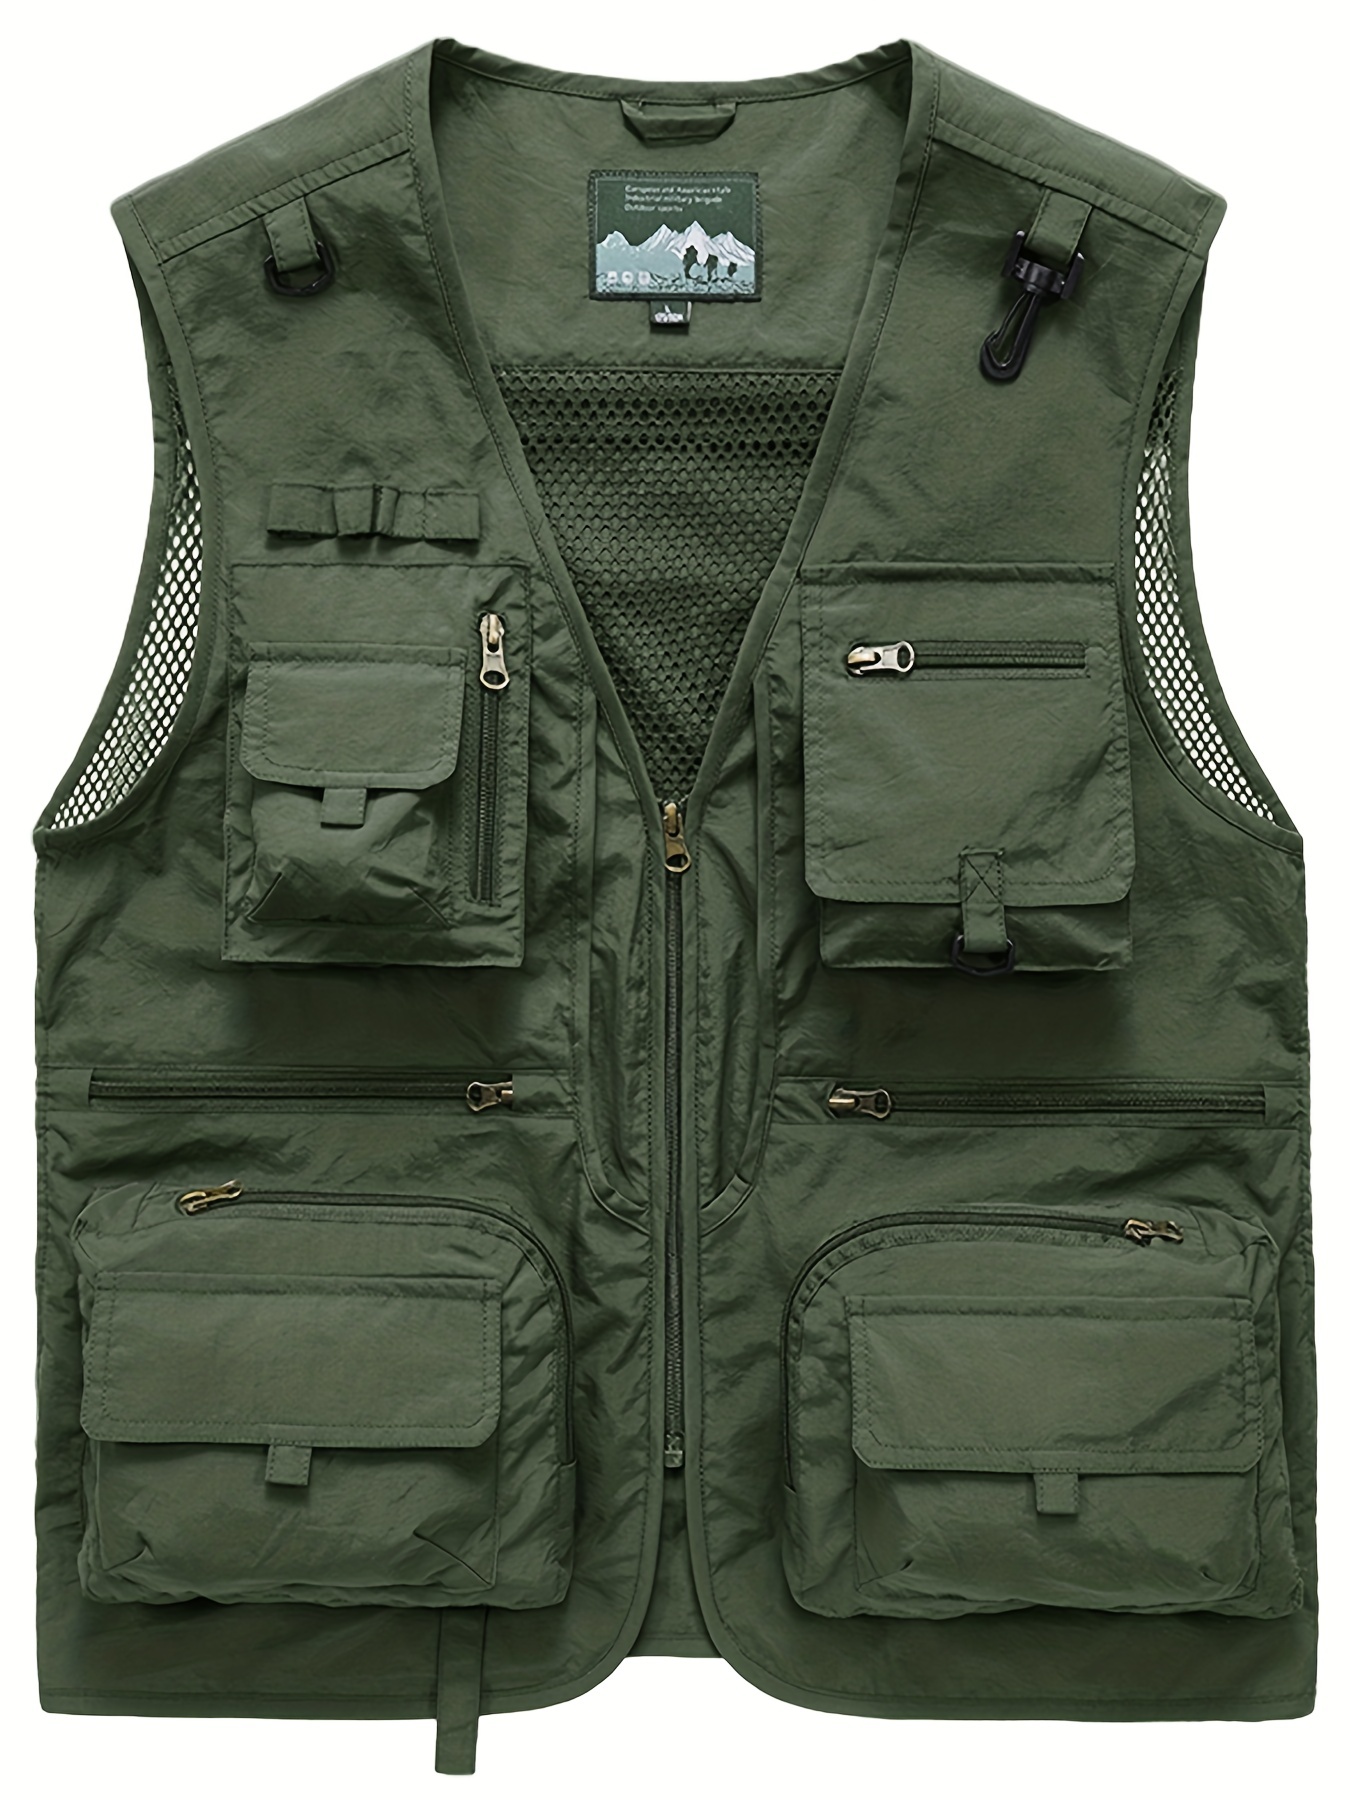 Men's Fishing Vest, Utility Shooting Safari Travel Vest With Pockets